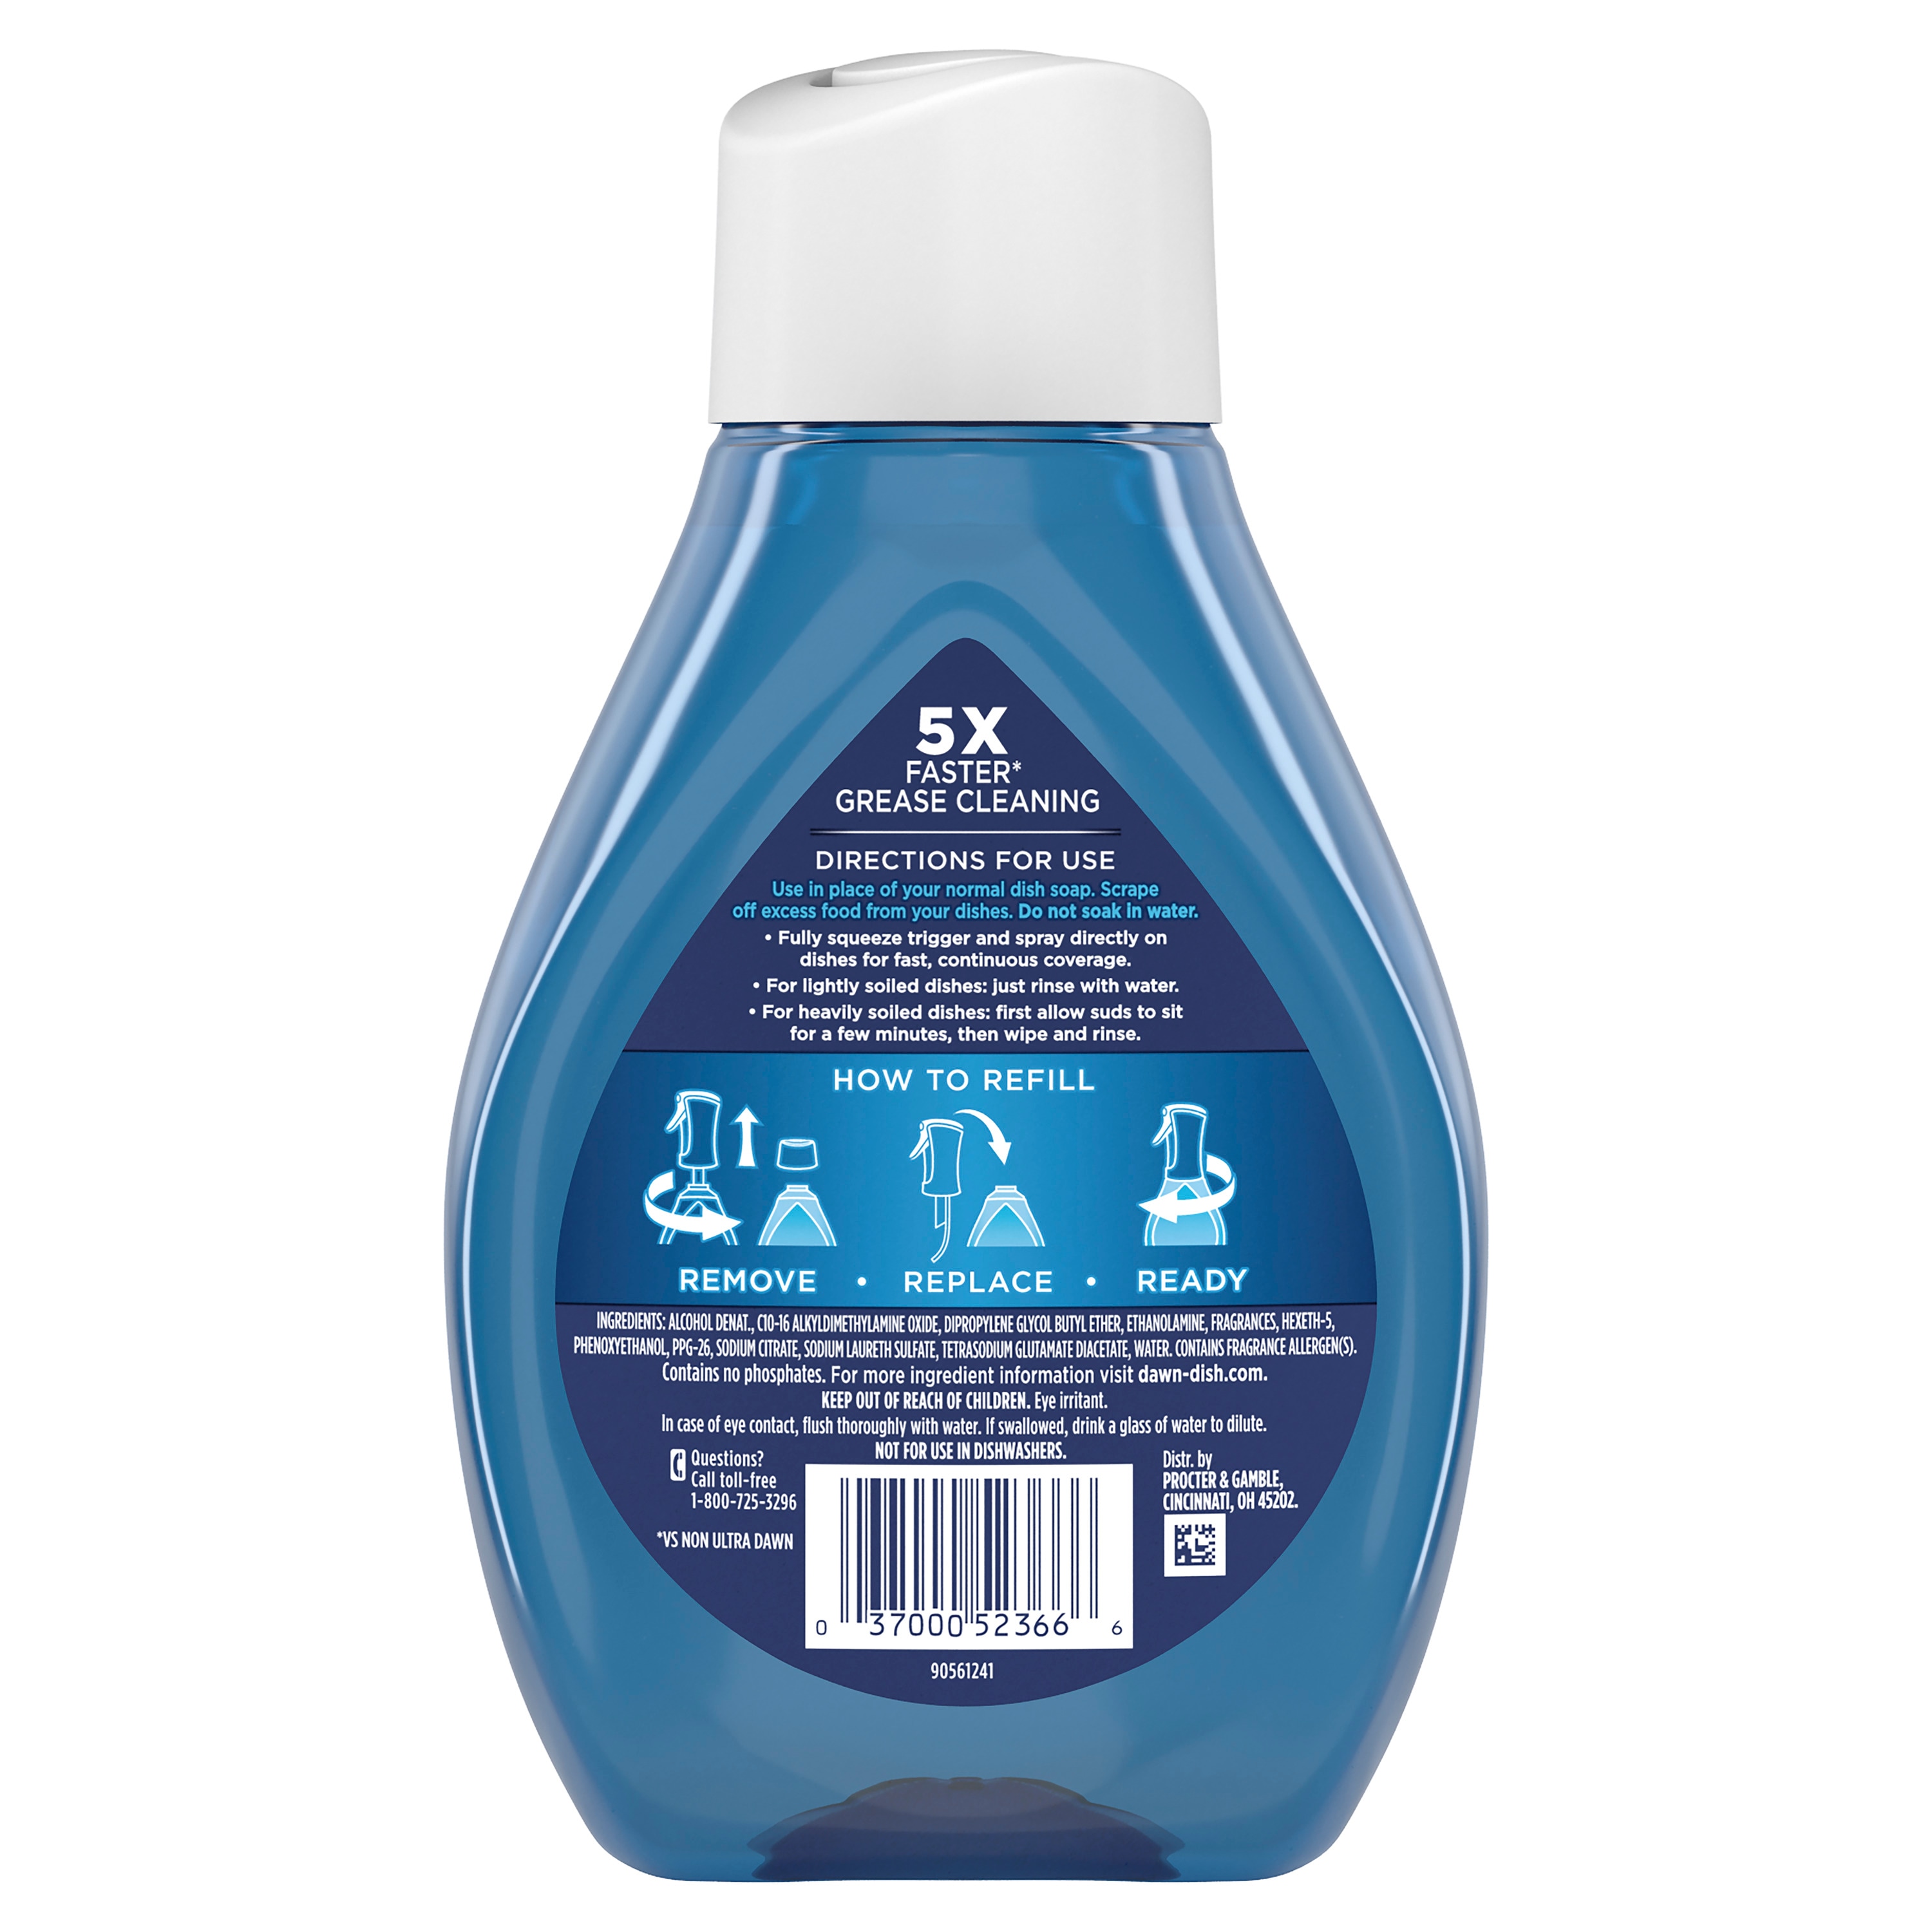 Buy Dawn Powerwash 65739 Dish Soap Spray Refill, 16 oz, Liquid, Free and  Clear Scent, Clear Clear